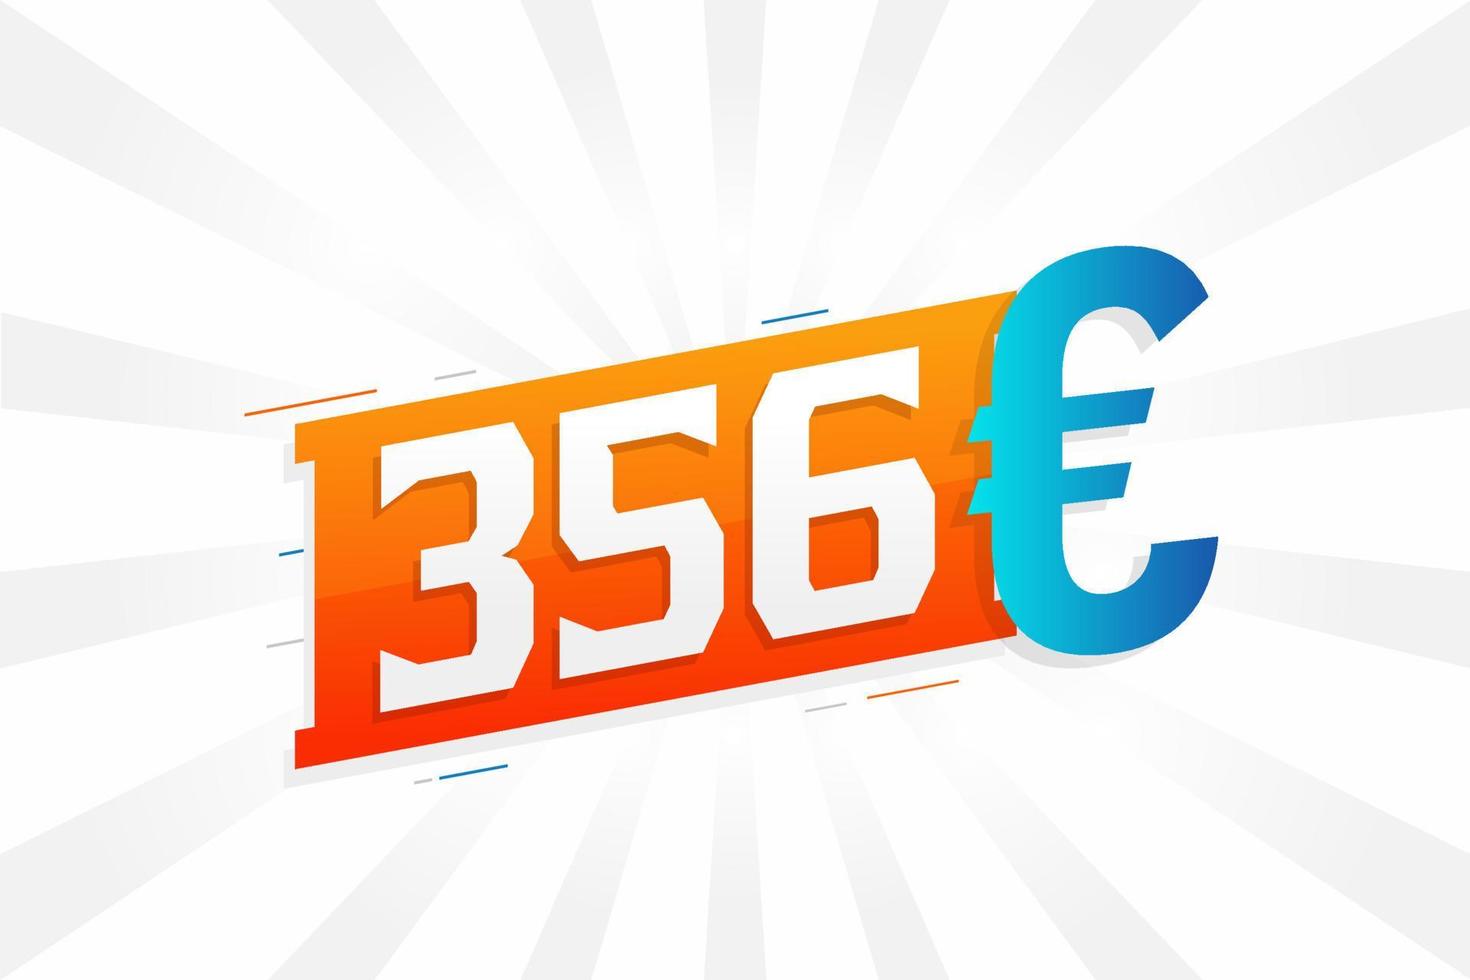 356 euro valuta vektor text symbol. 356 euro europeisk union pengar stock vektor